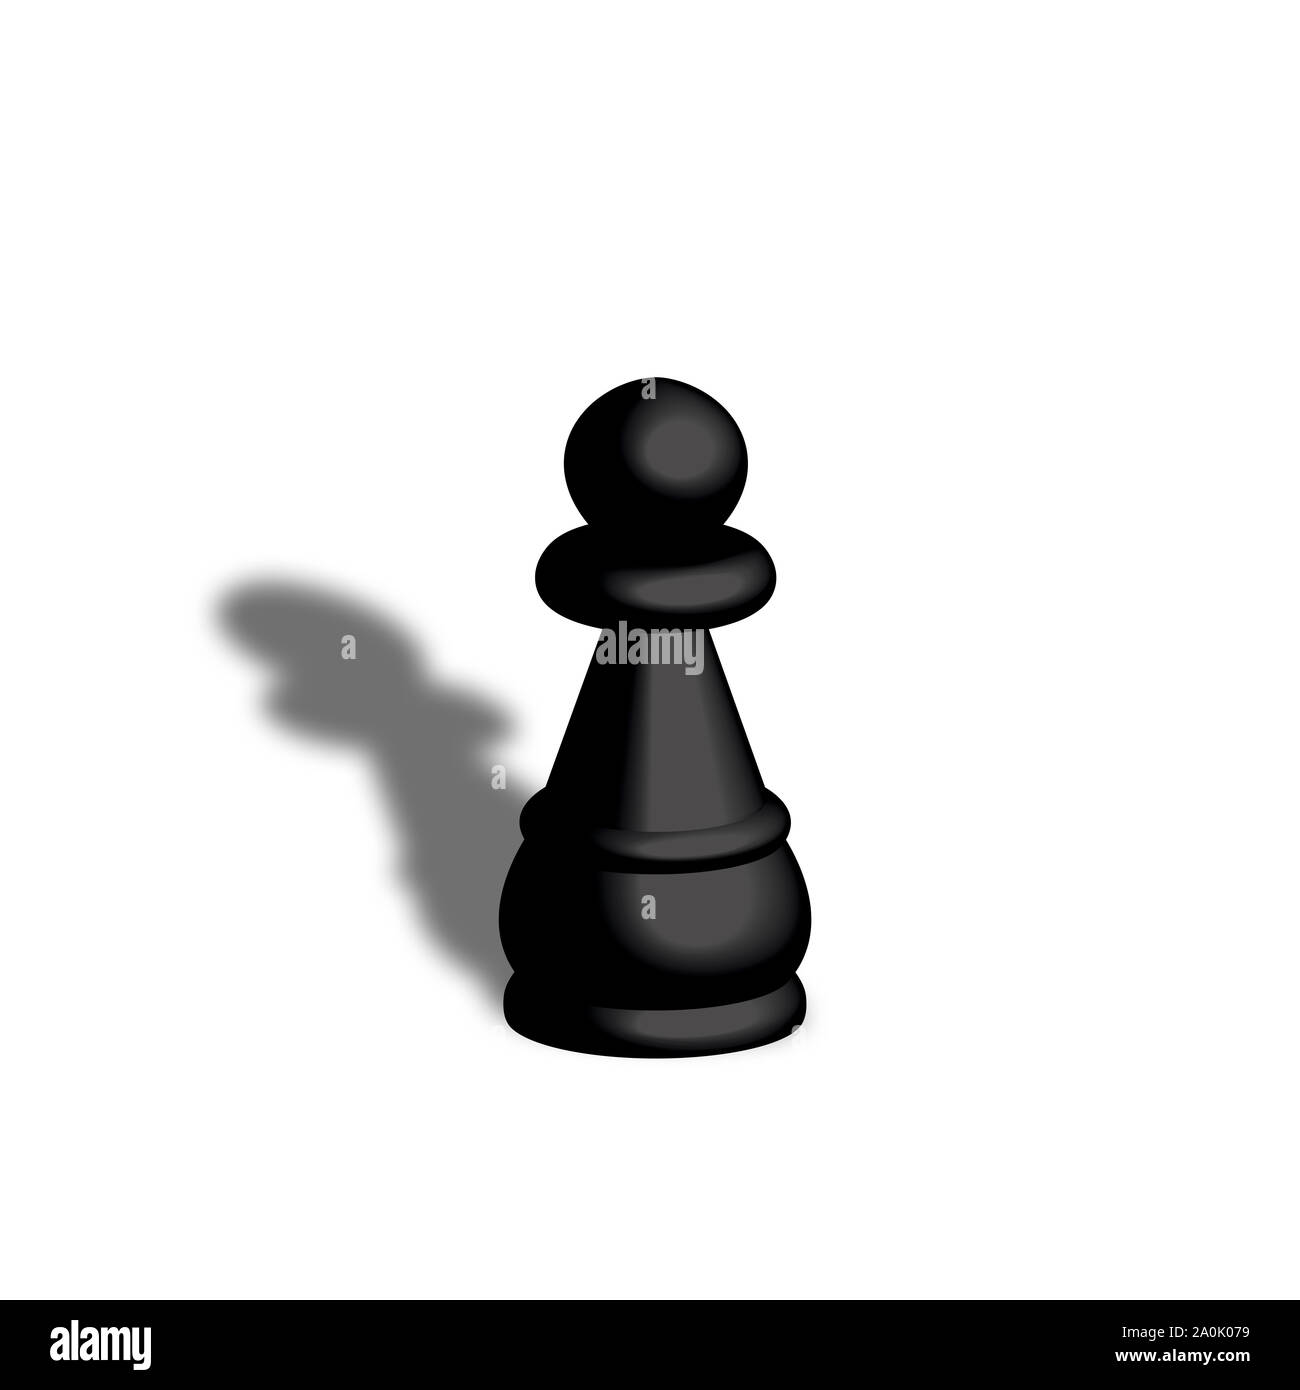 Chess symbols - ♟